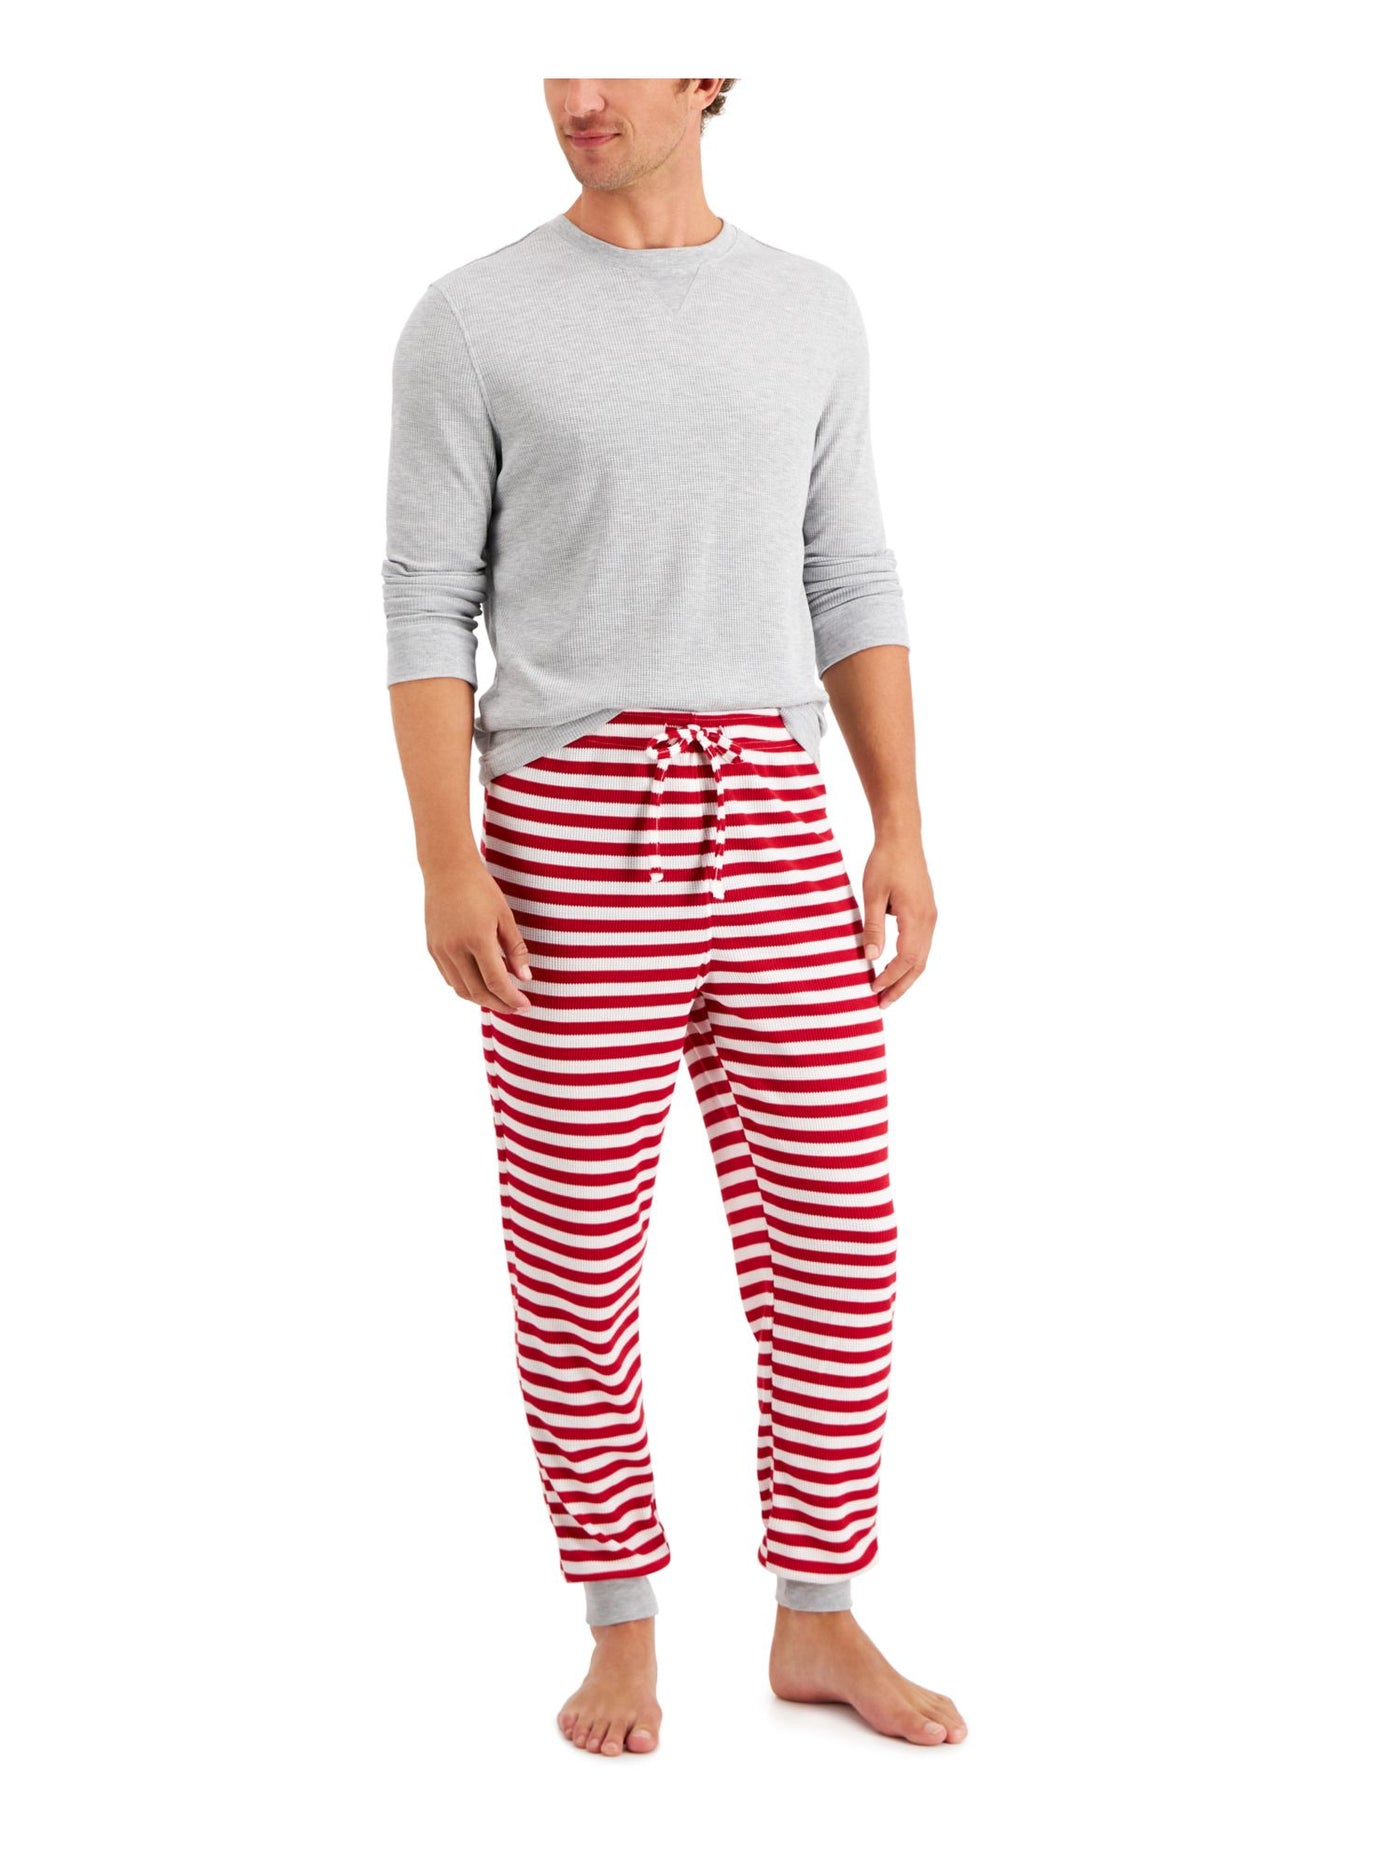 FAMILY PJs Mens Red Top Elastic Band Lounge Pants Thermal Pajamas XL